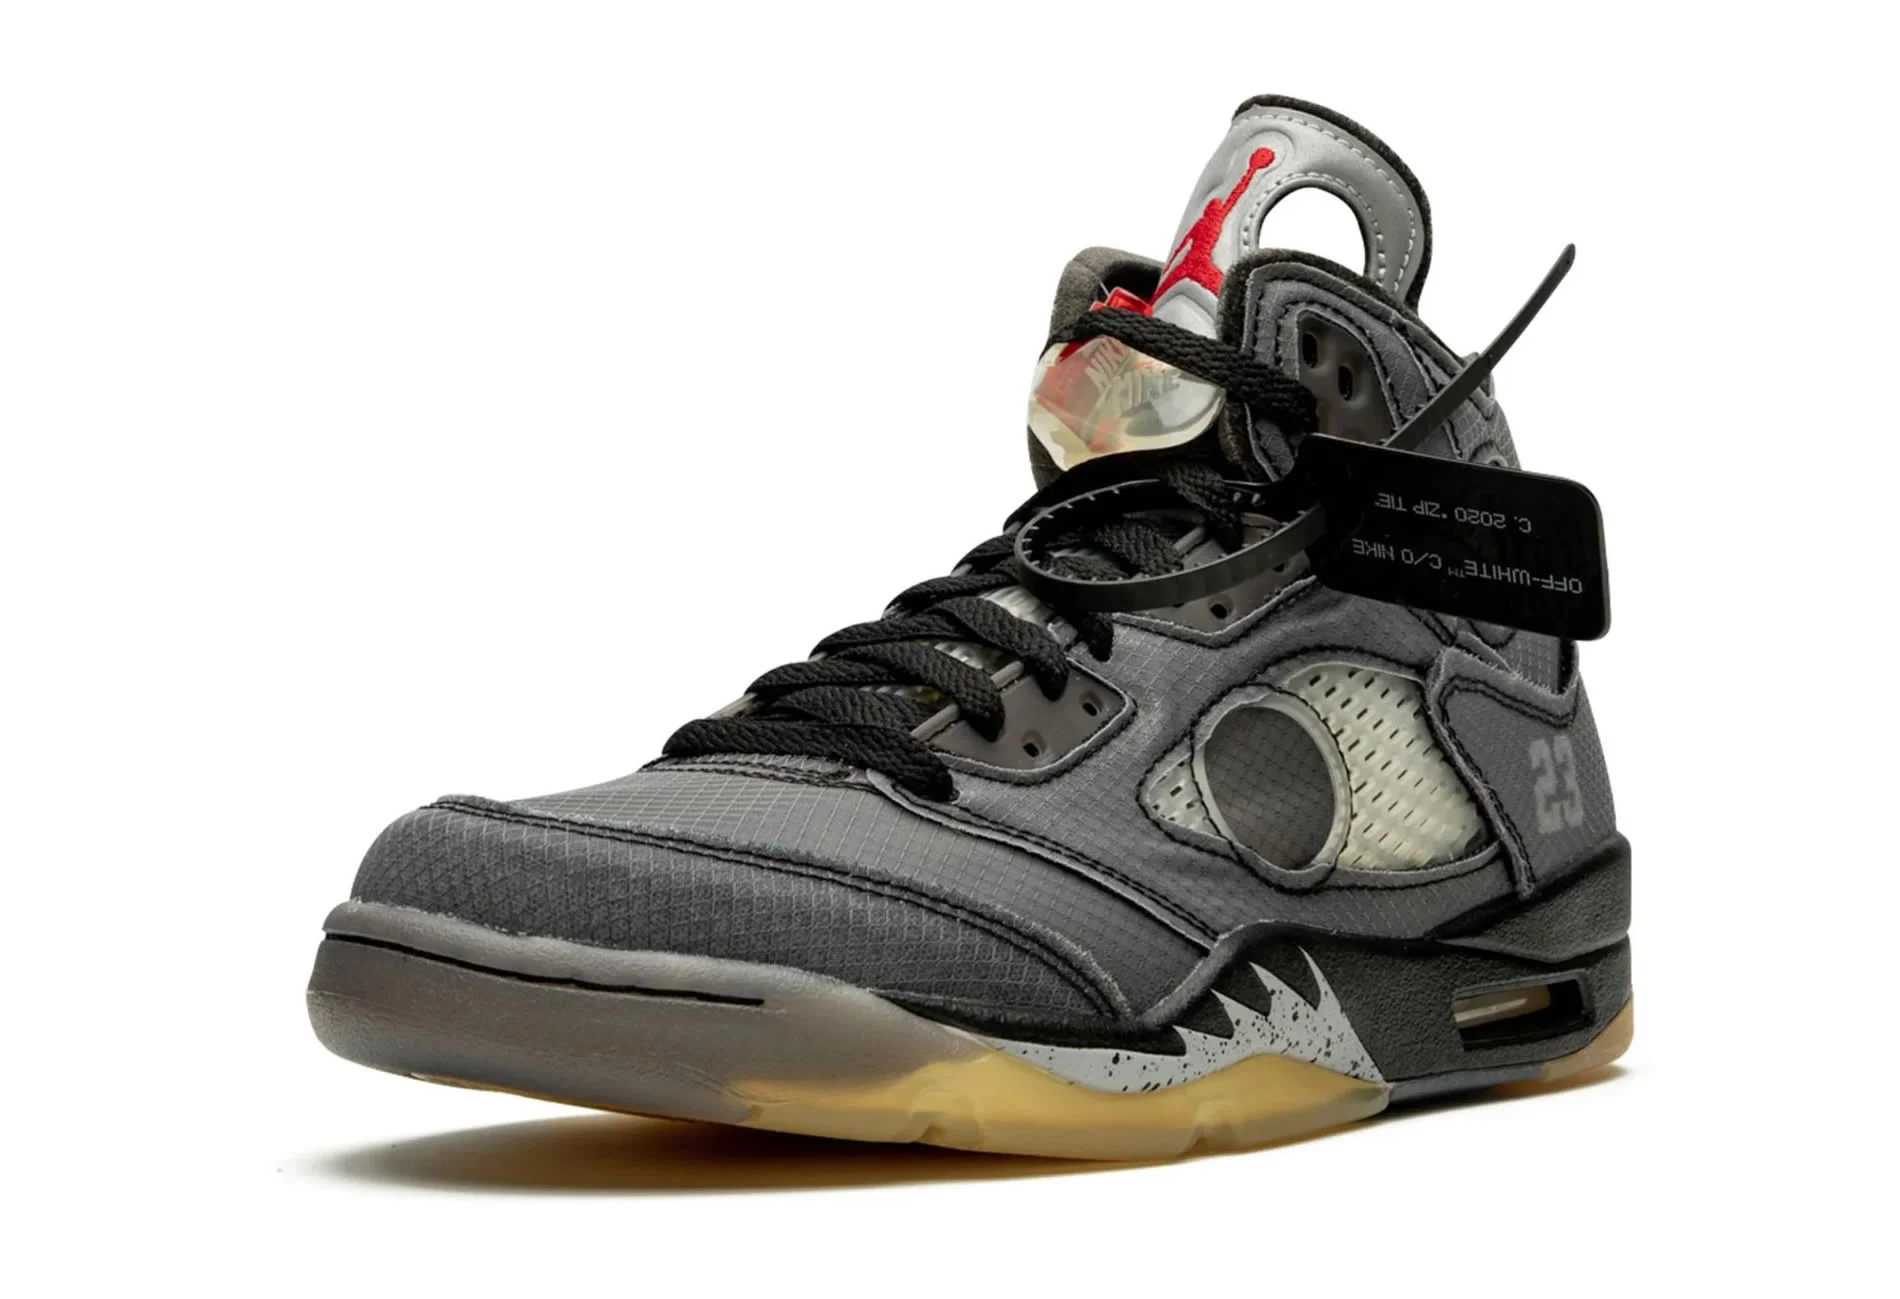 Air Jordan 5 Retro Sp Off White Ct8480 001 Ljr Batch Sneakers (2) - www.ljrofficial.com